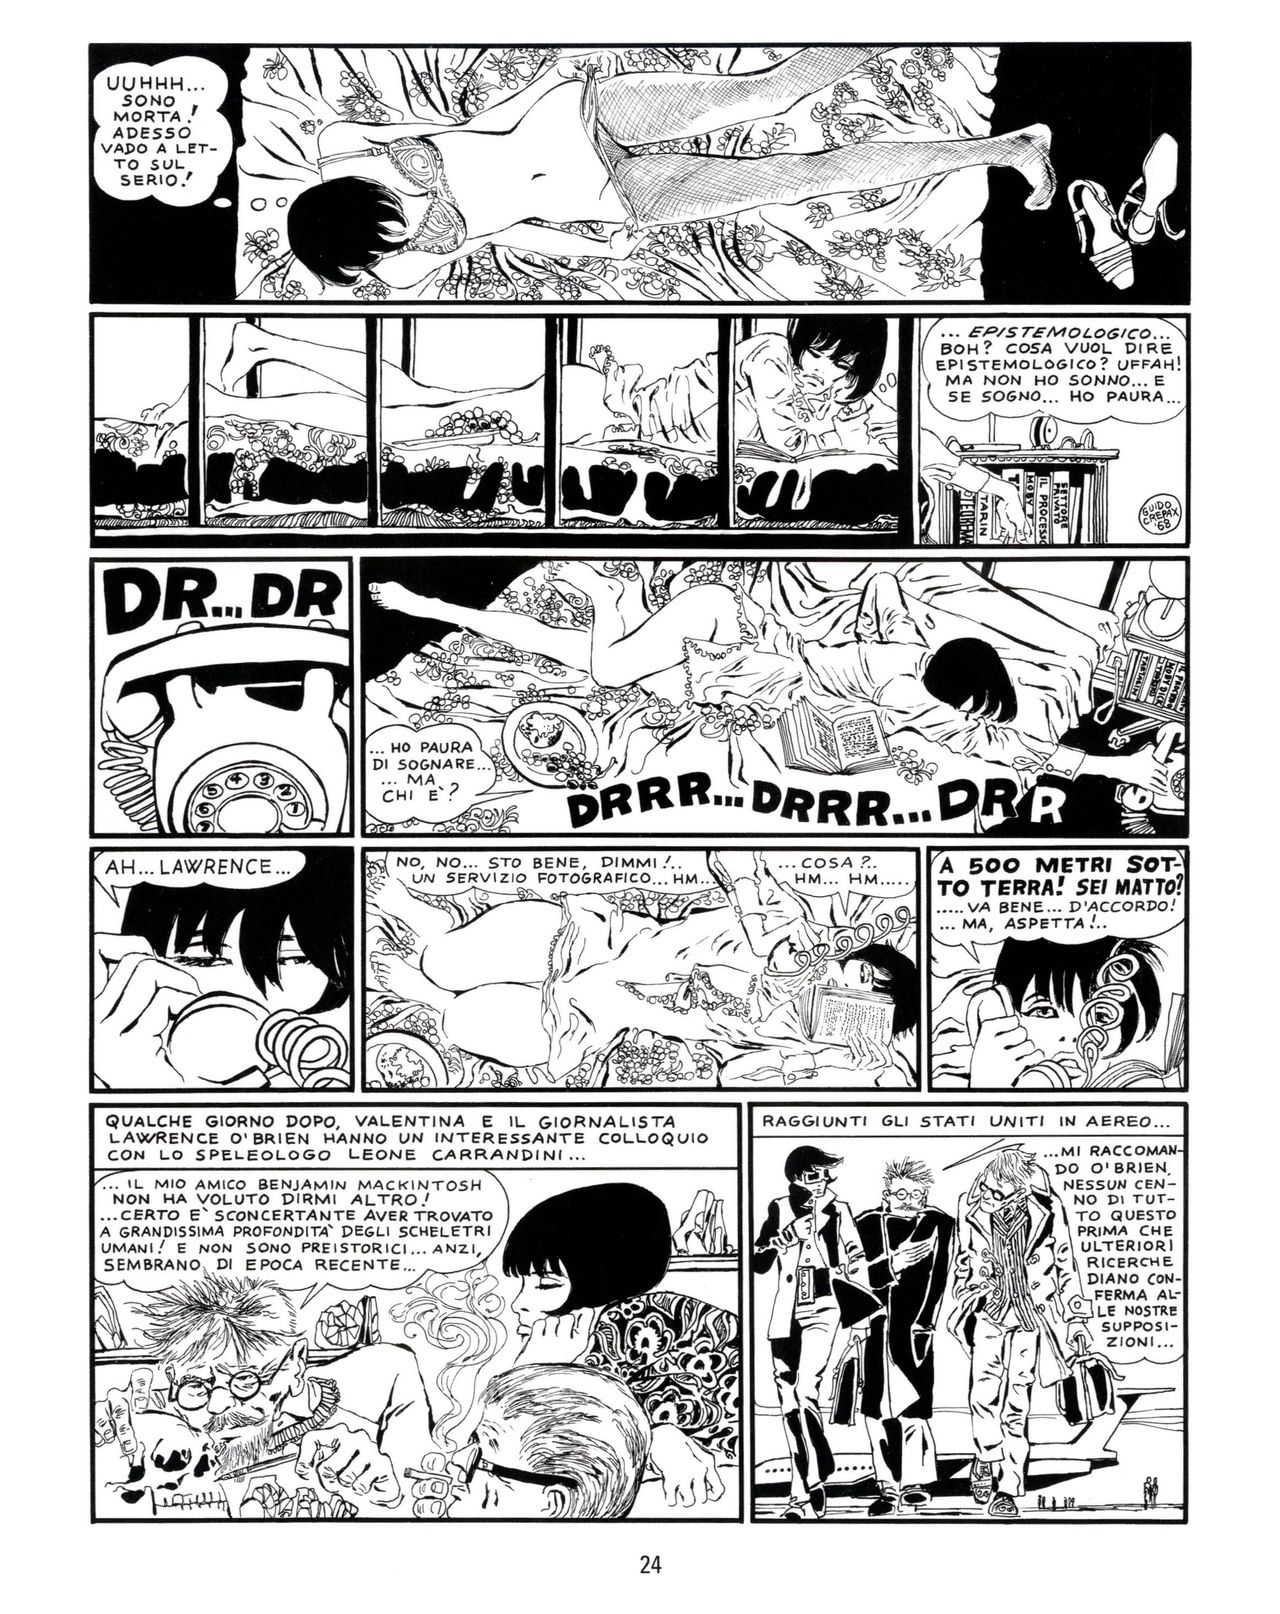 [Guido Crepax] Erotica Fumetti #25 : L'ascesa dei sotterranei : I cavalieri ciechi [Italian] 25